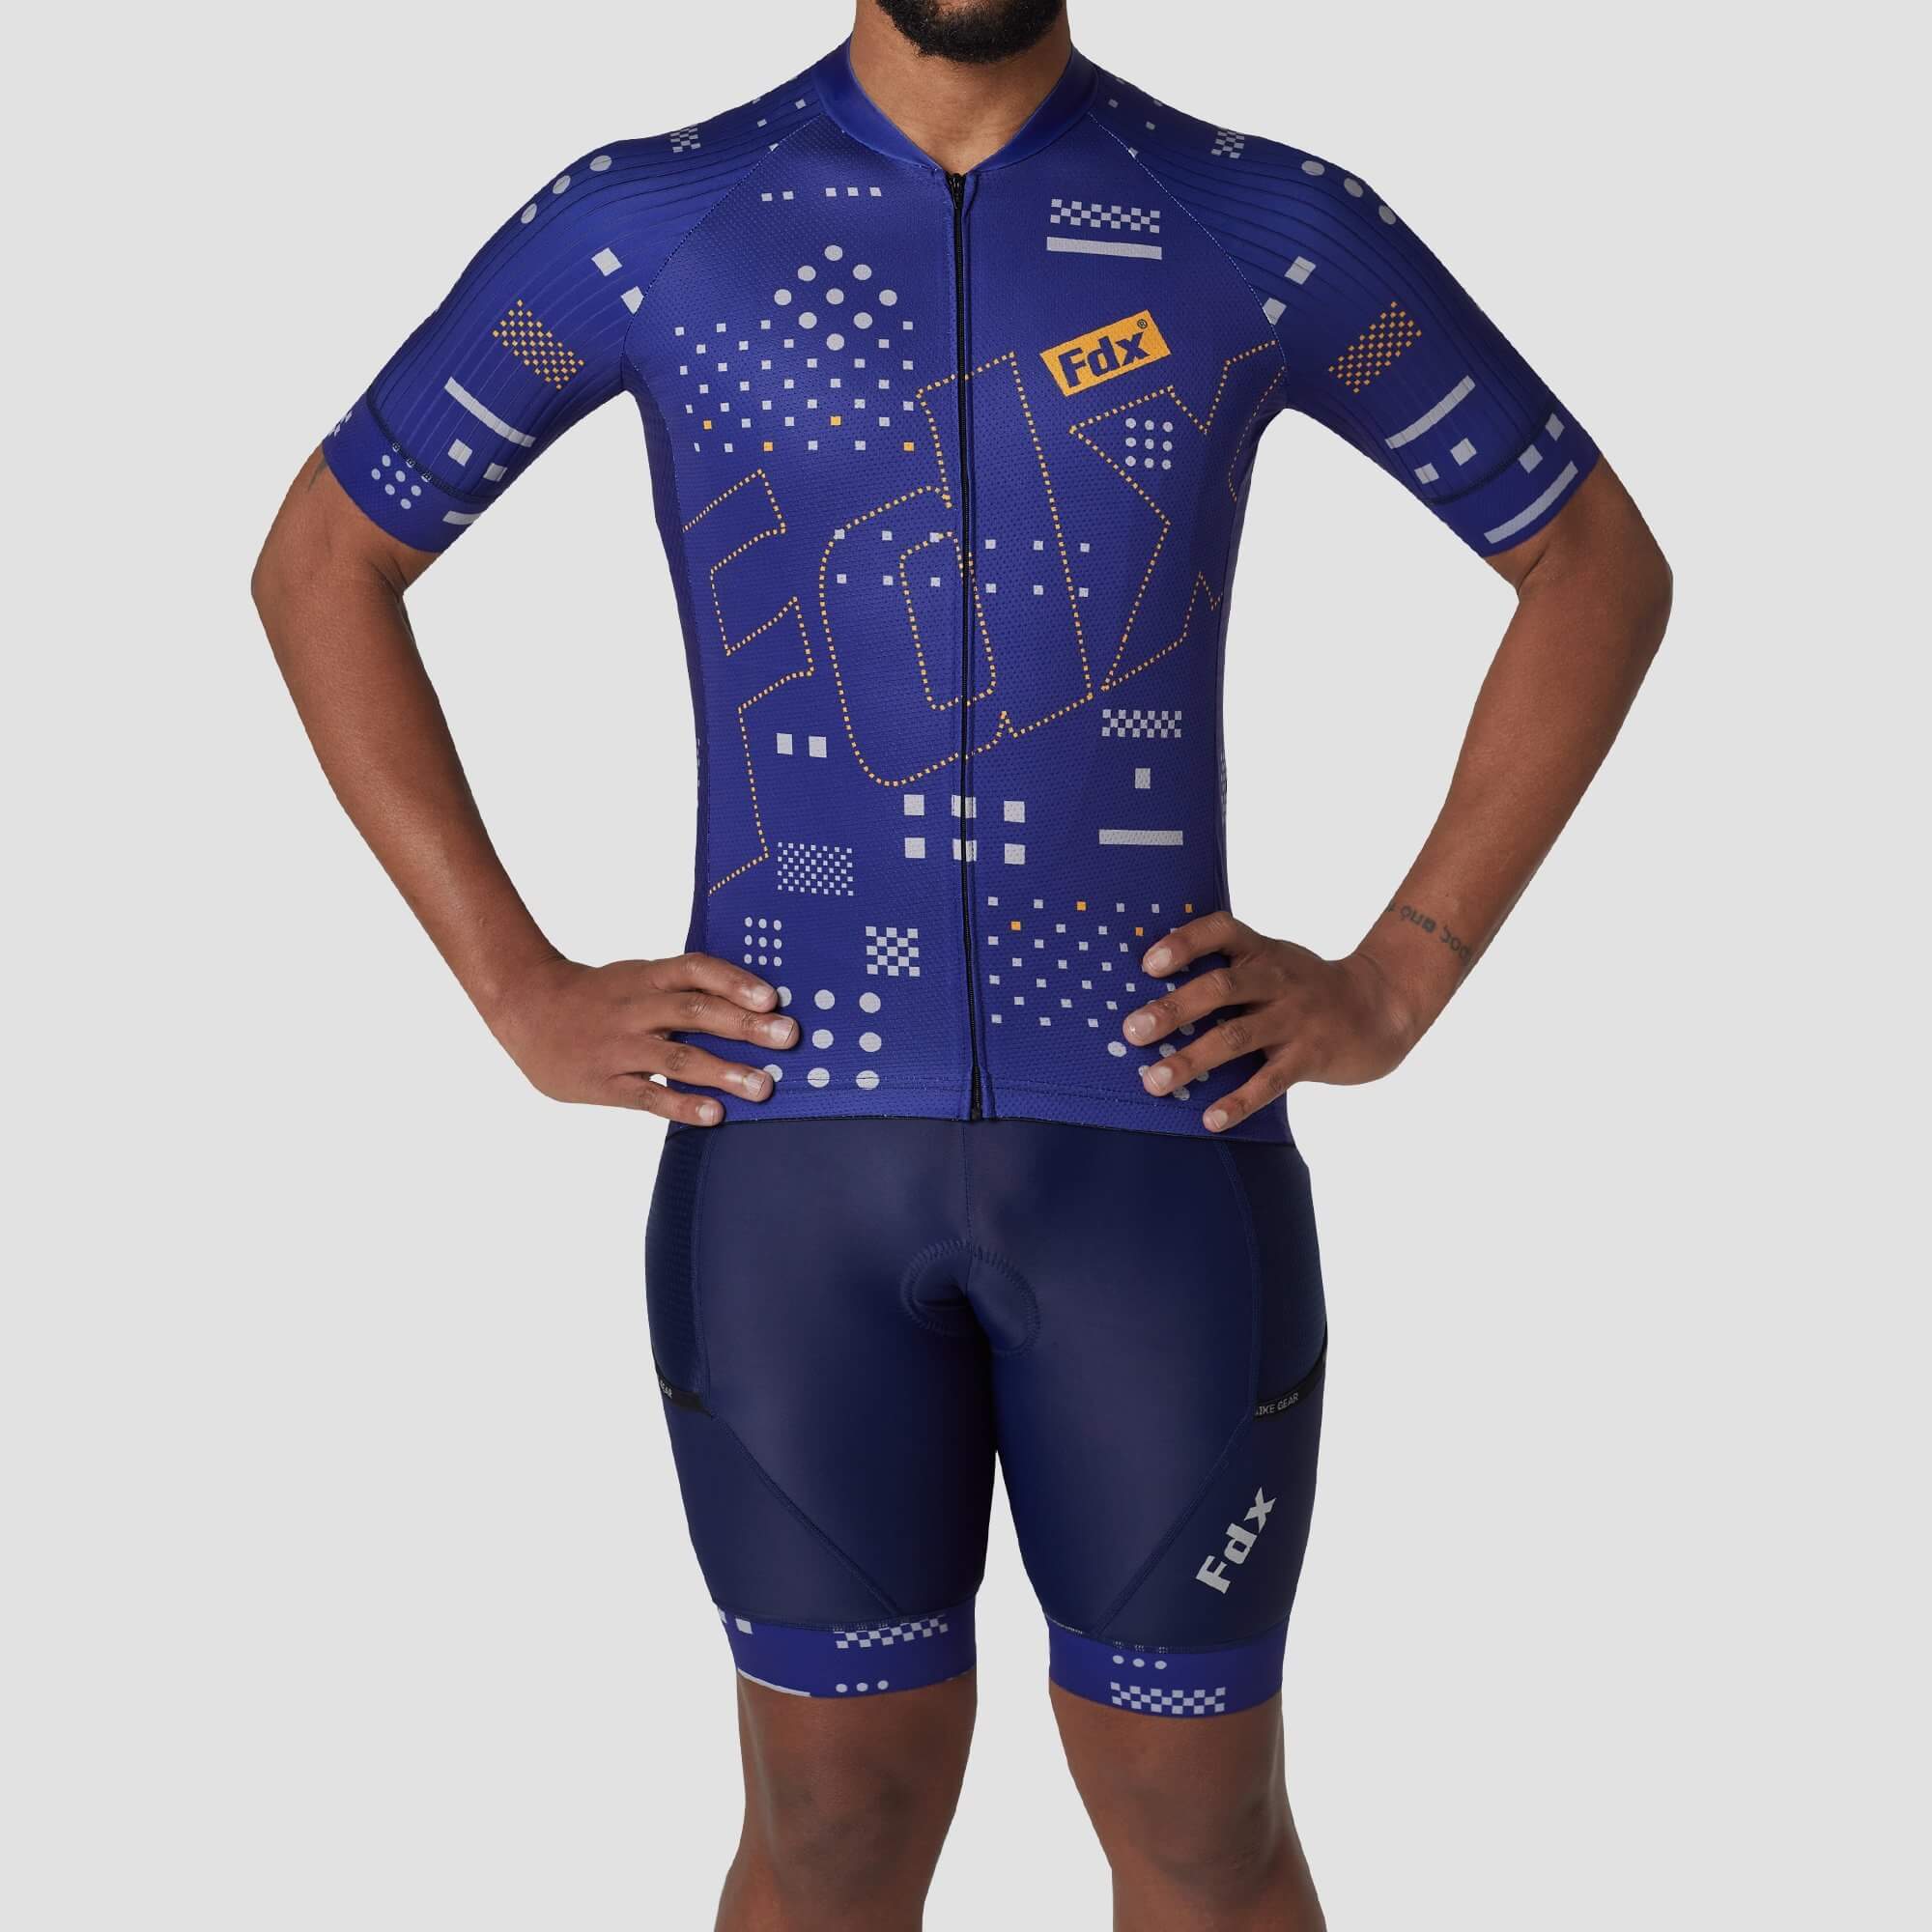 Fdx Mens Blue Sleeve Cycling Jersey & Gel Padded Bib Shorts Best Summer Road Bike Wear Light Weight, Hi-viz Reflectors & Pockets - All Day